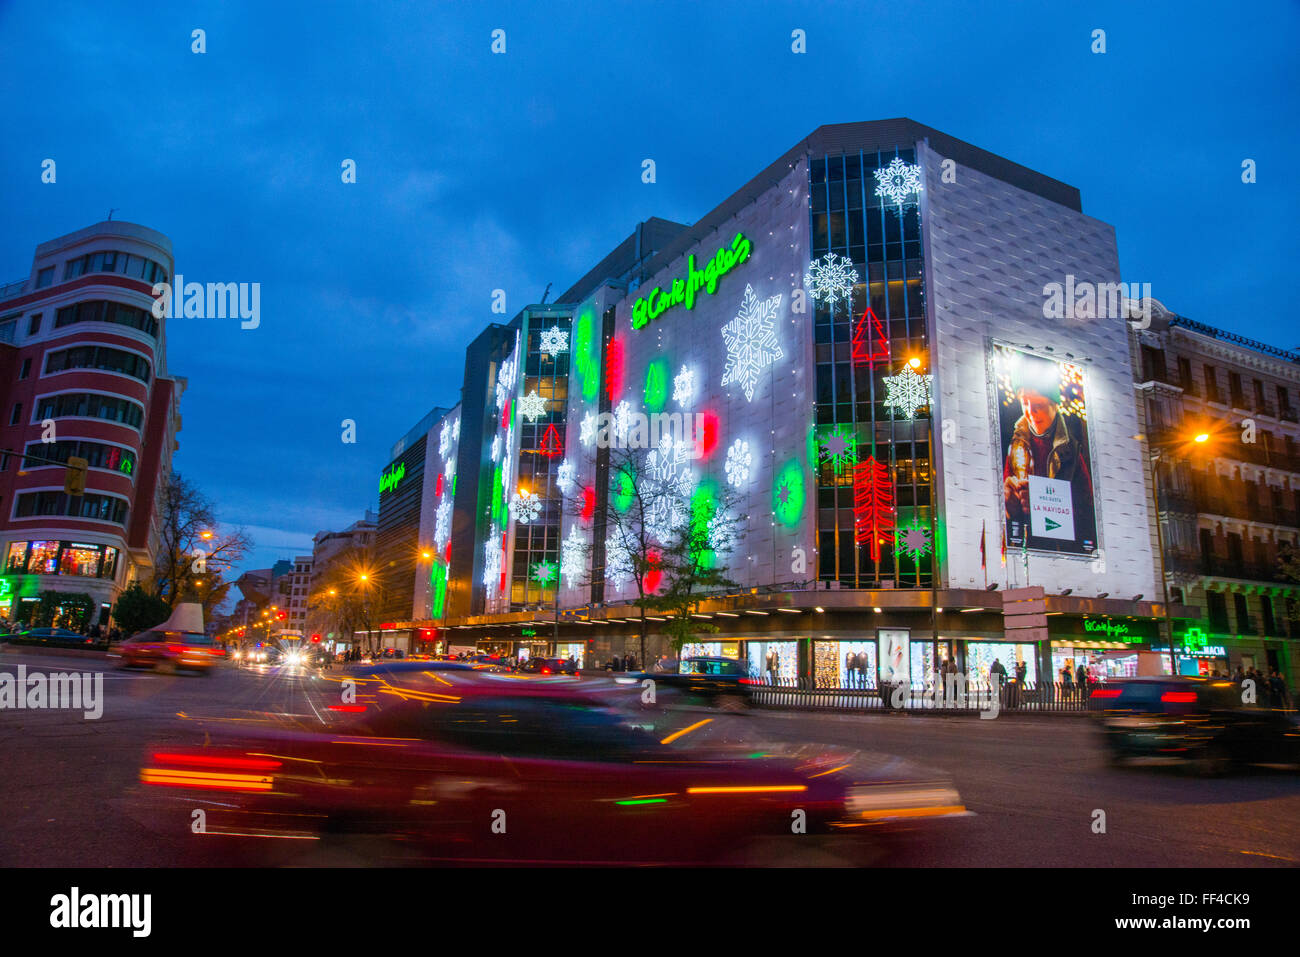 El Corte Ingles shopping center at Christmas time, night view. Goya street, Madrid, Spain. Stock Photo